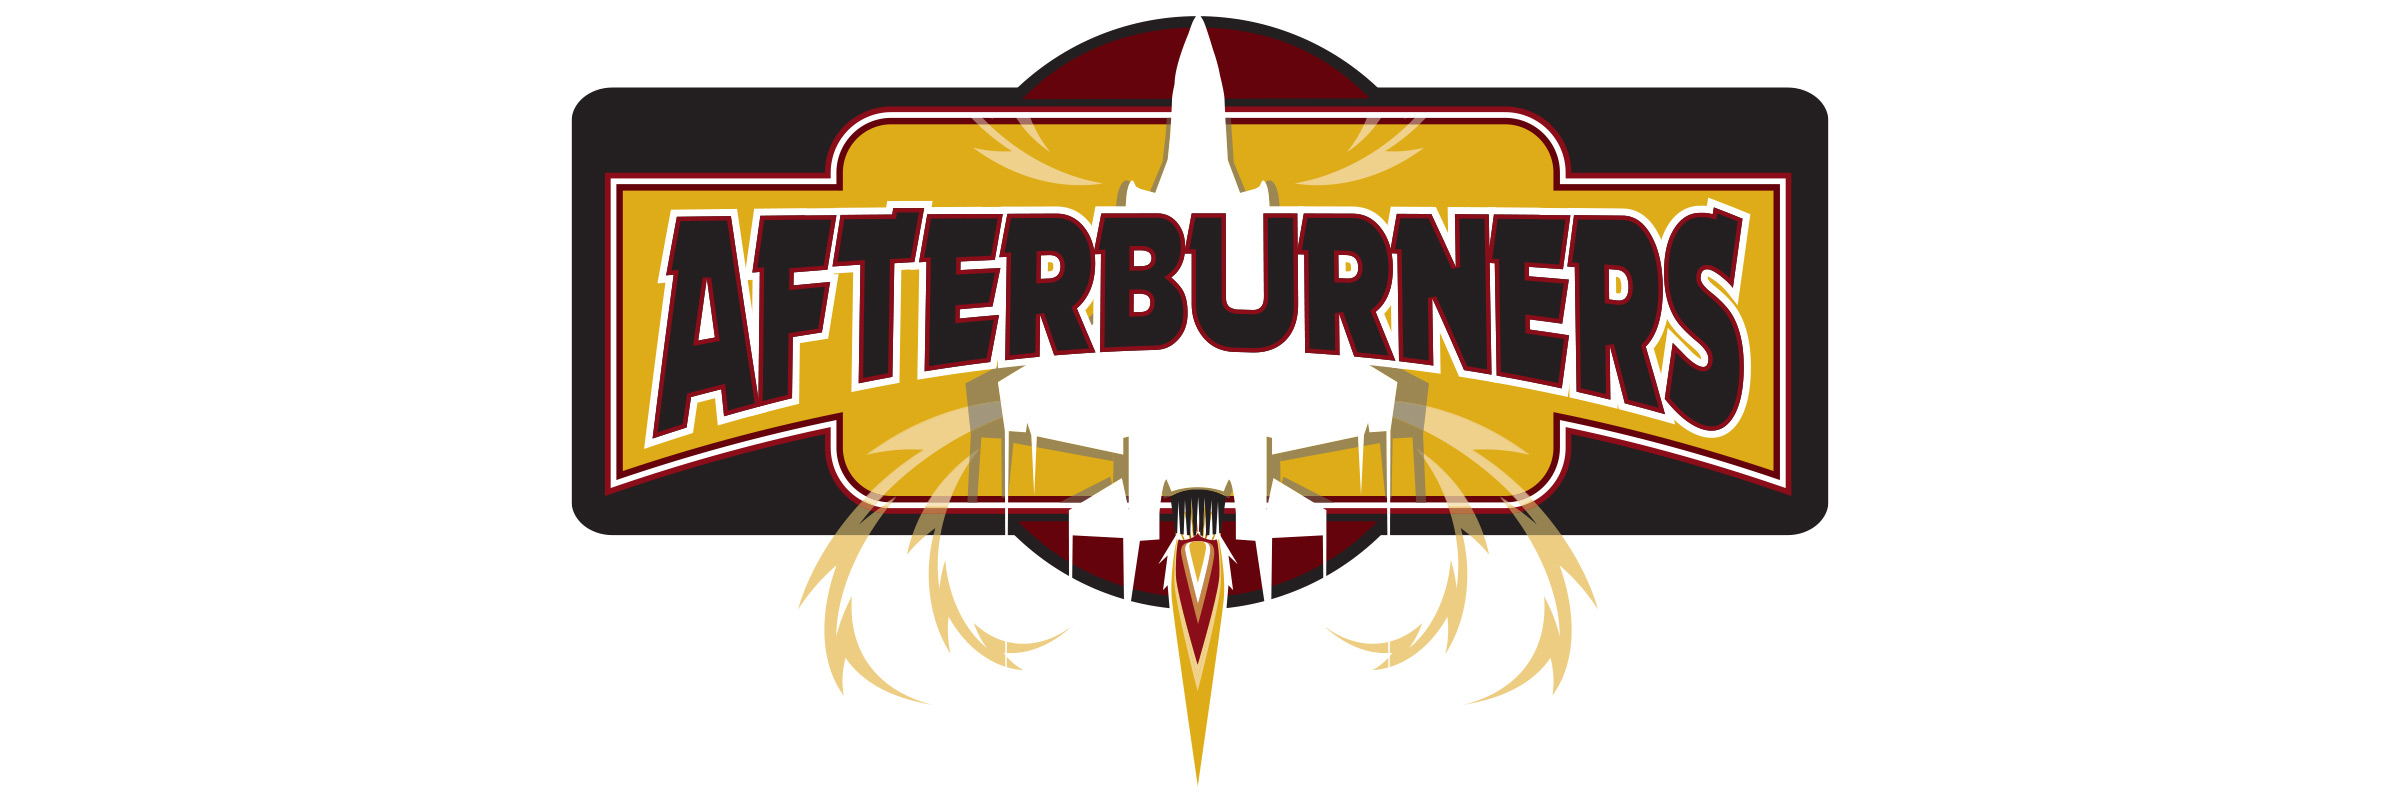 Afterburners-HiRez.jpg